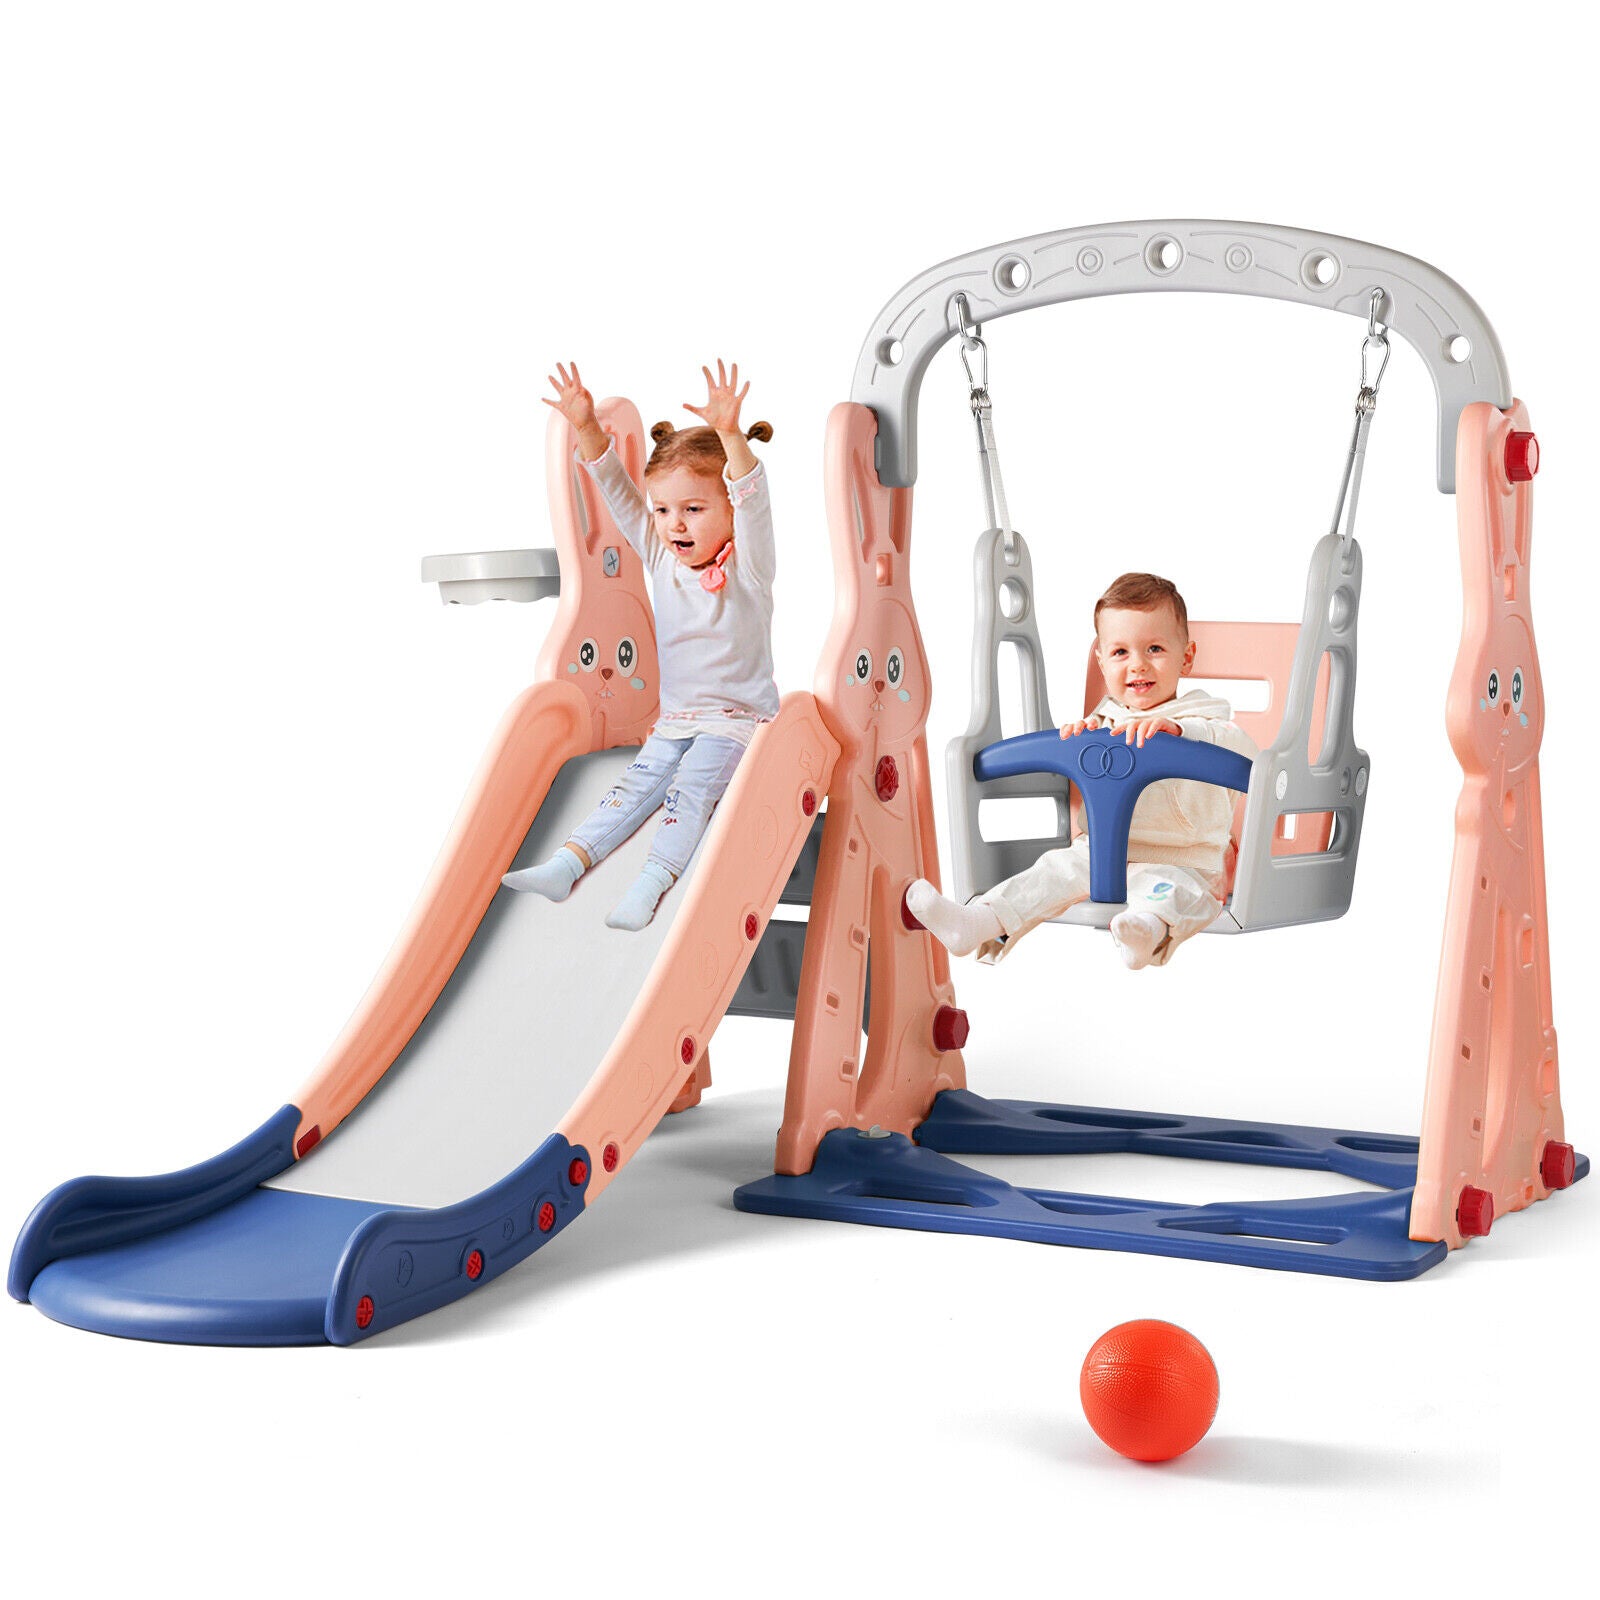 JOYLDIAS 4 in 1 Kid Climber Toddler Slide and Swing Set